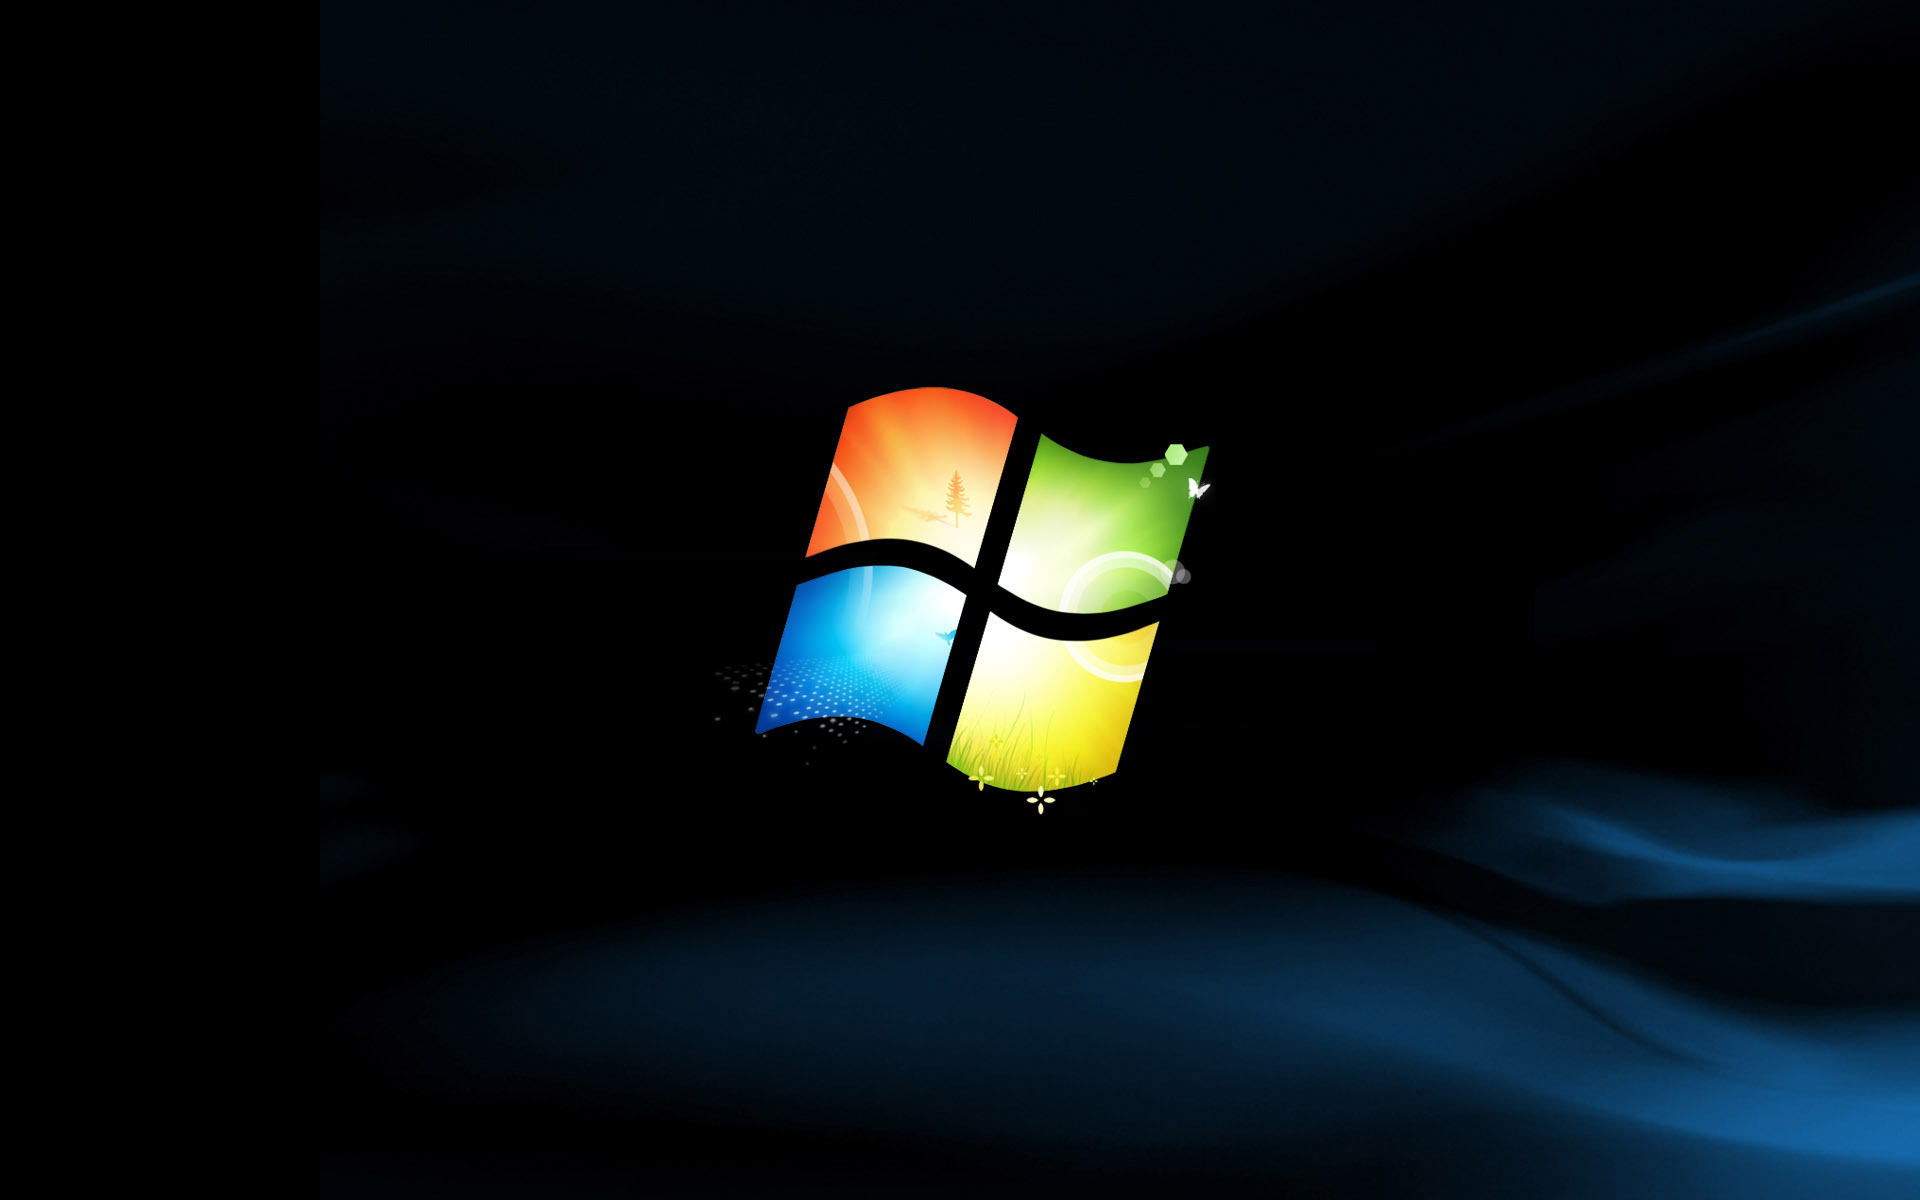 HD Wallpaper Background Puters Desktop Professional Windows By